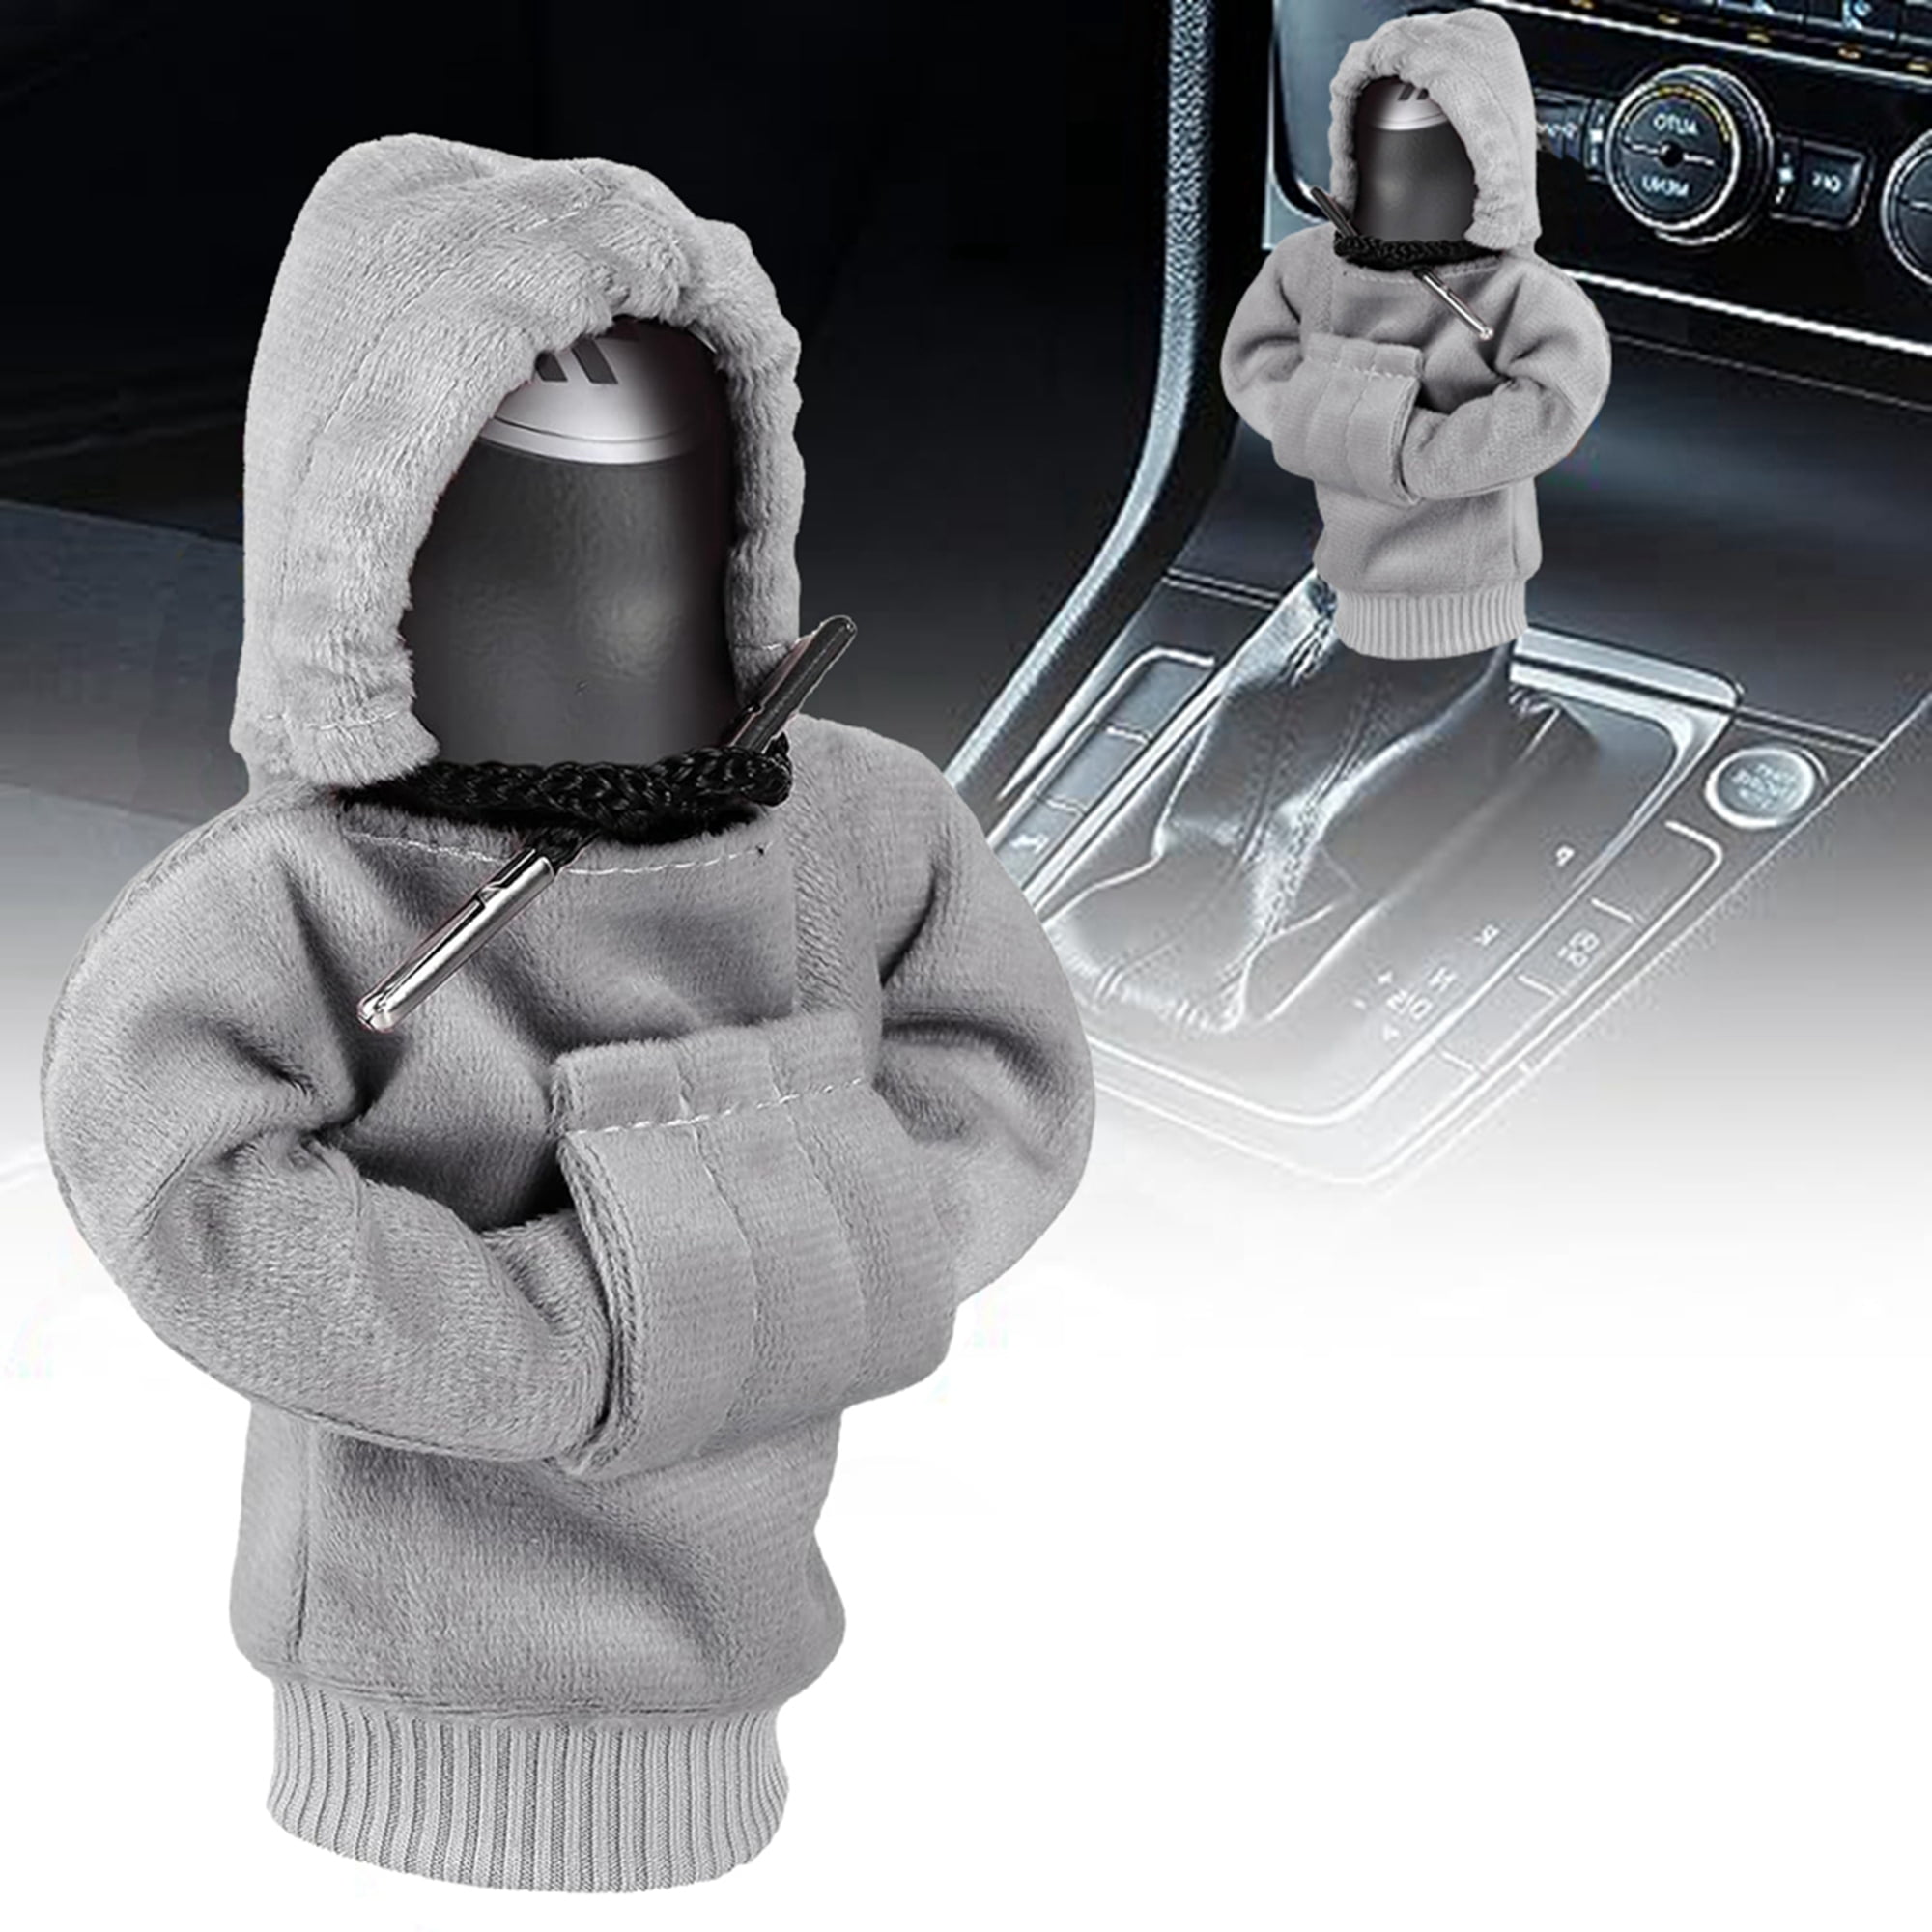 wybzd Car Shift Knob Hoodie, Cute Gear Shift Knob Cover Universal